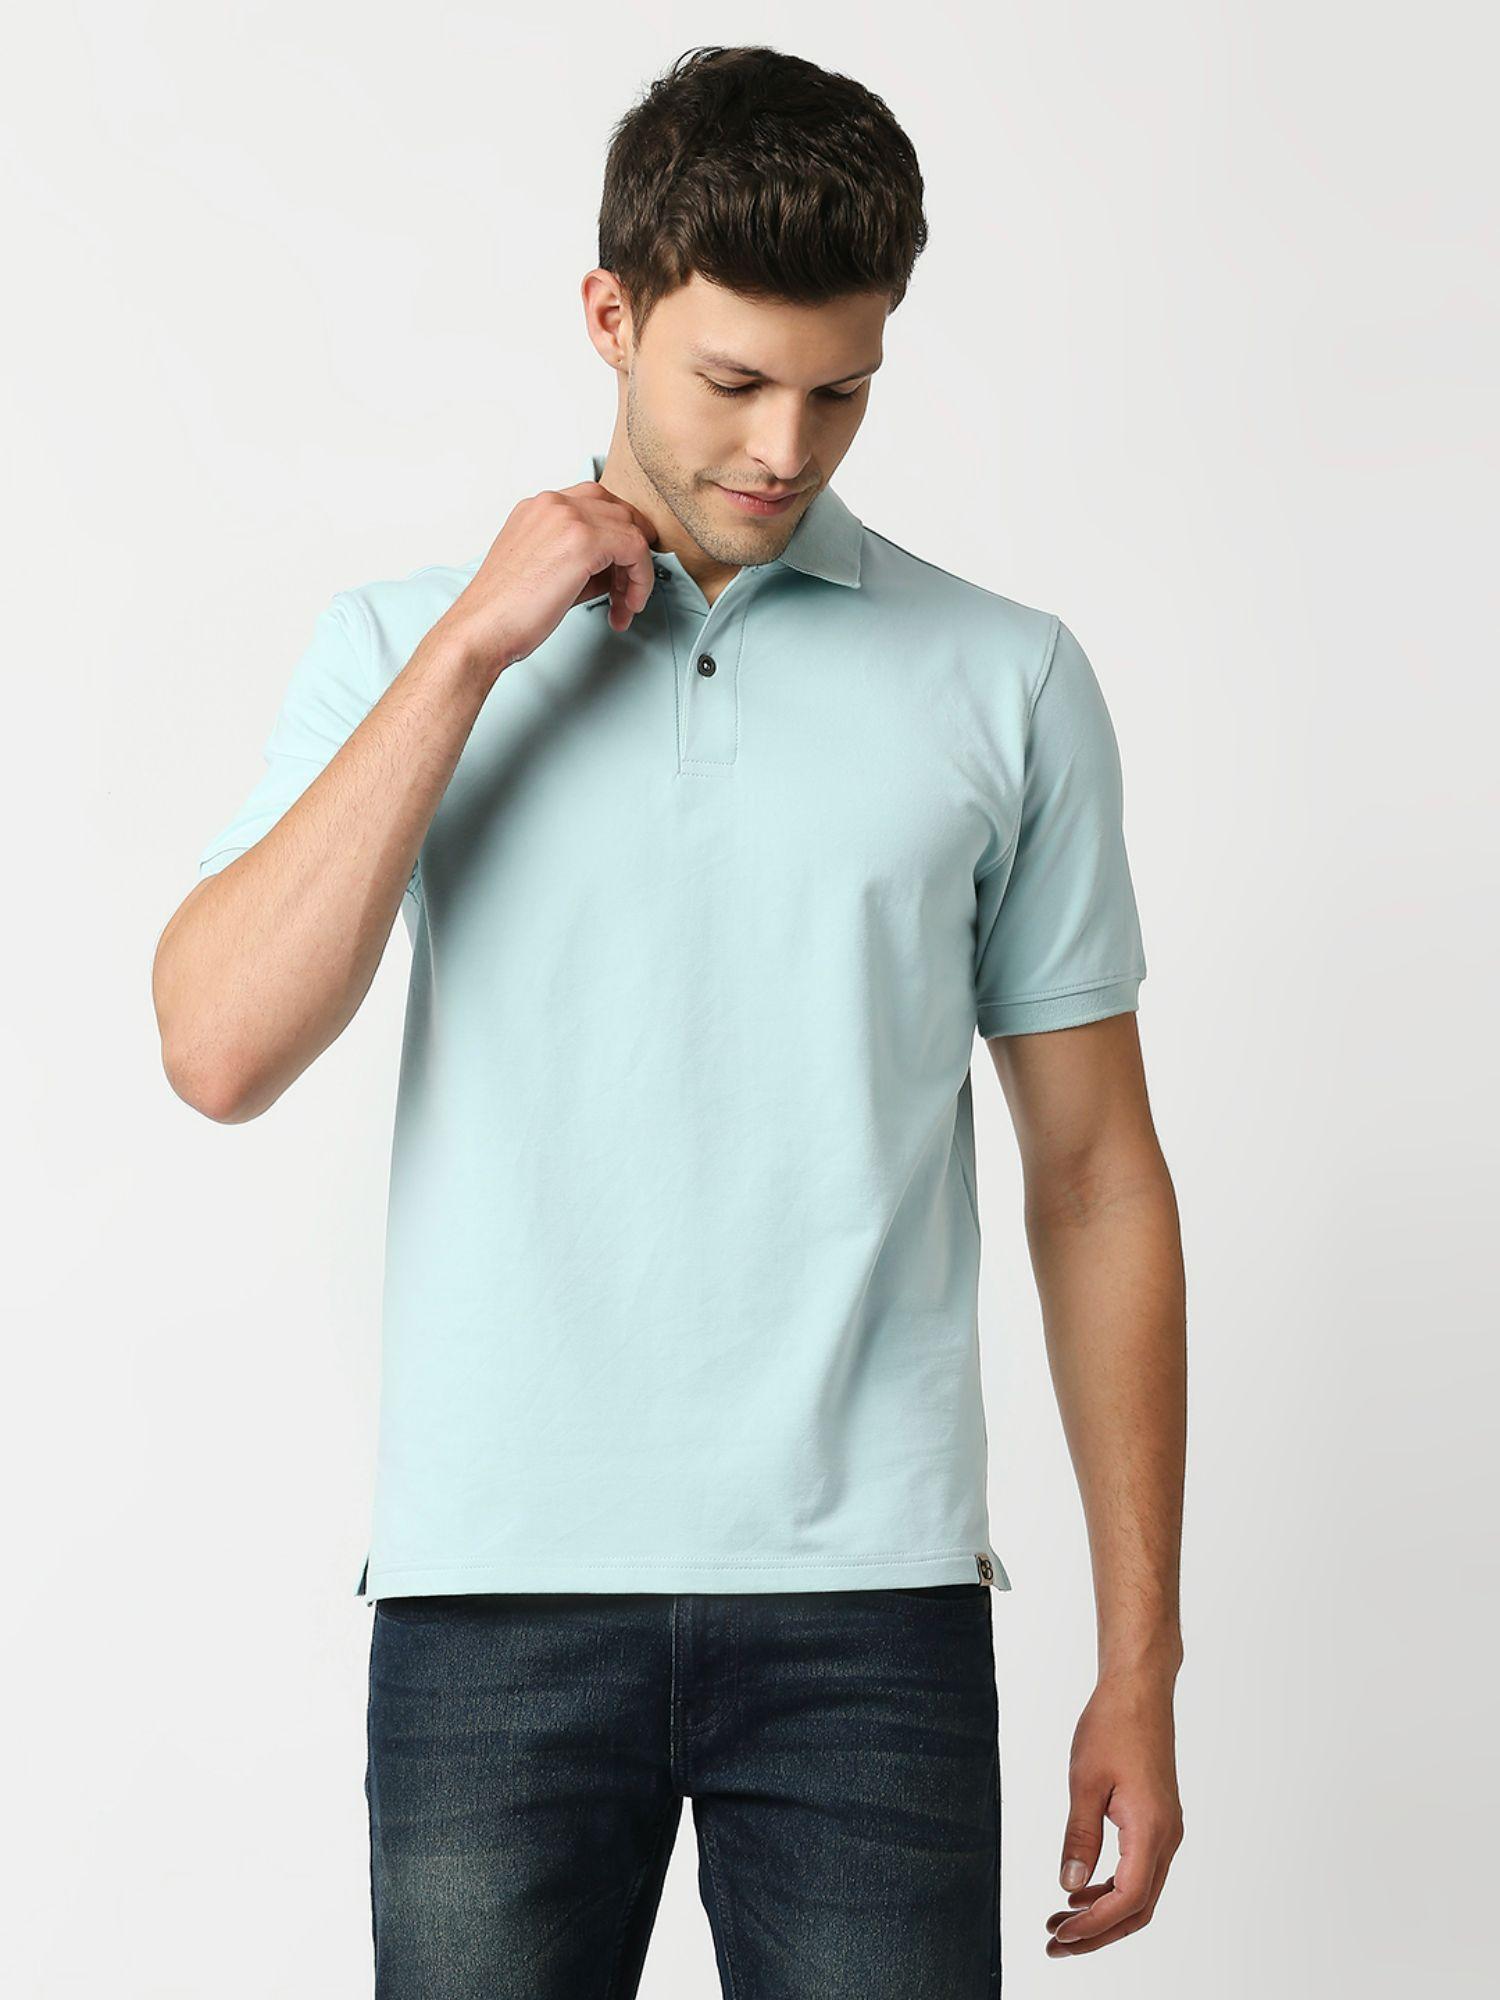 mens polo plain aqua color t shirt